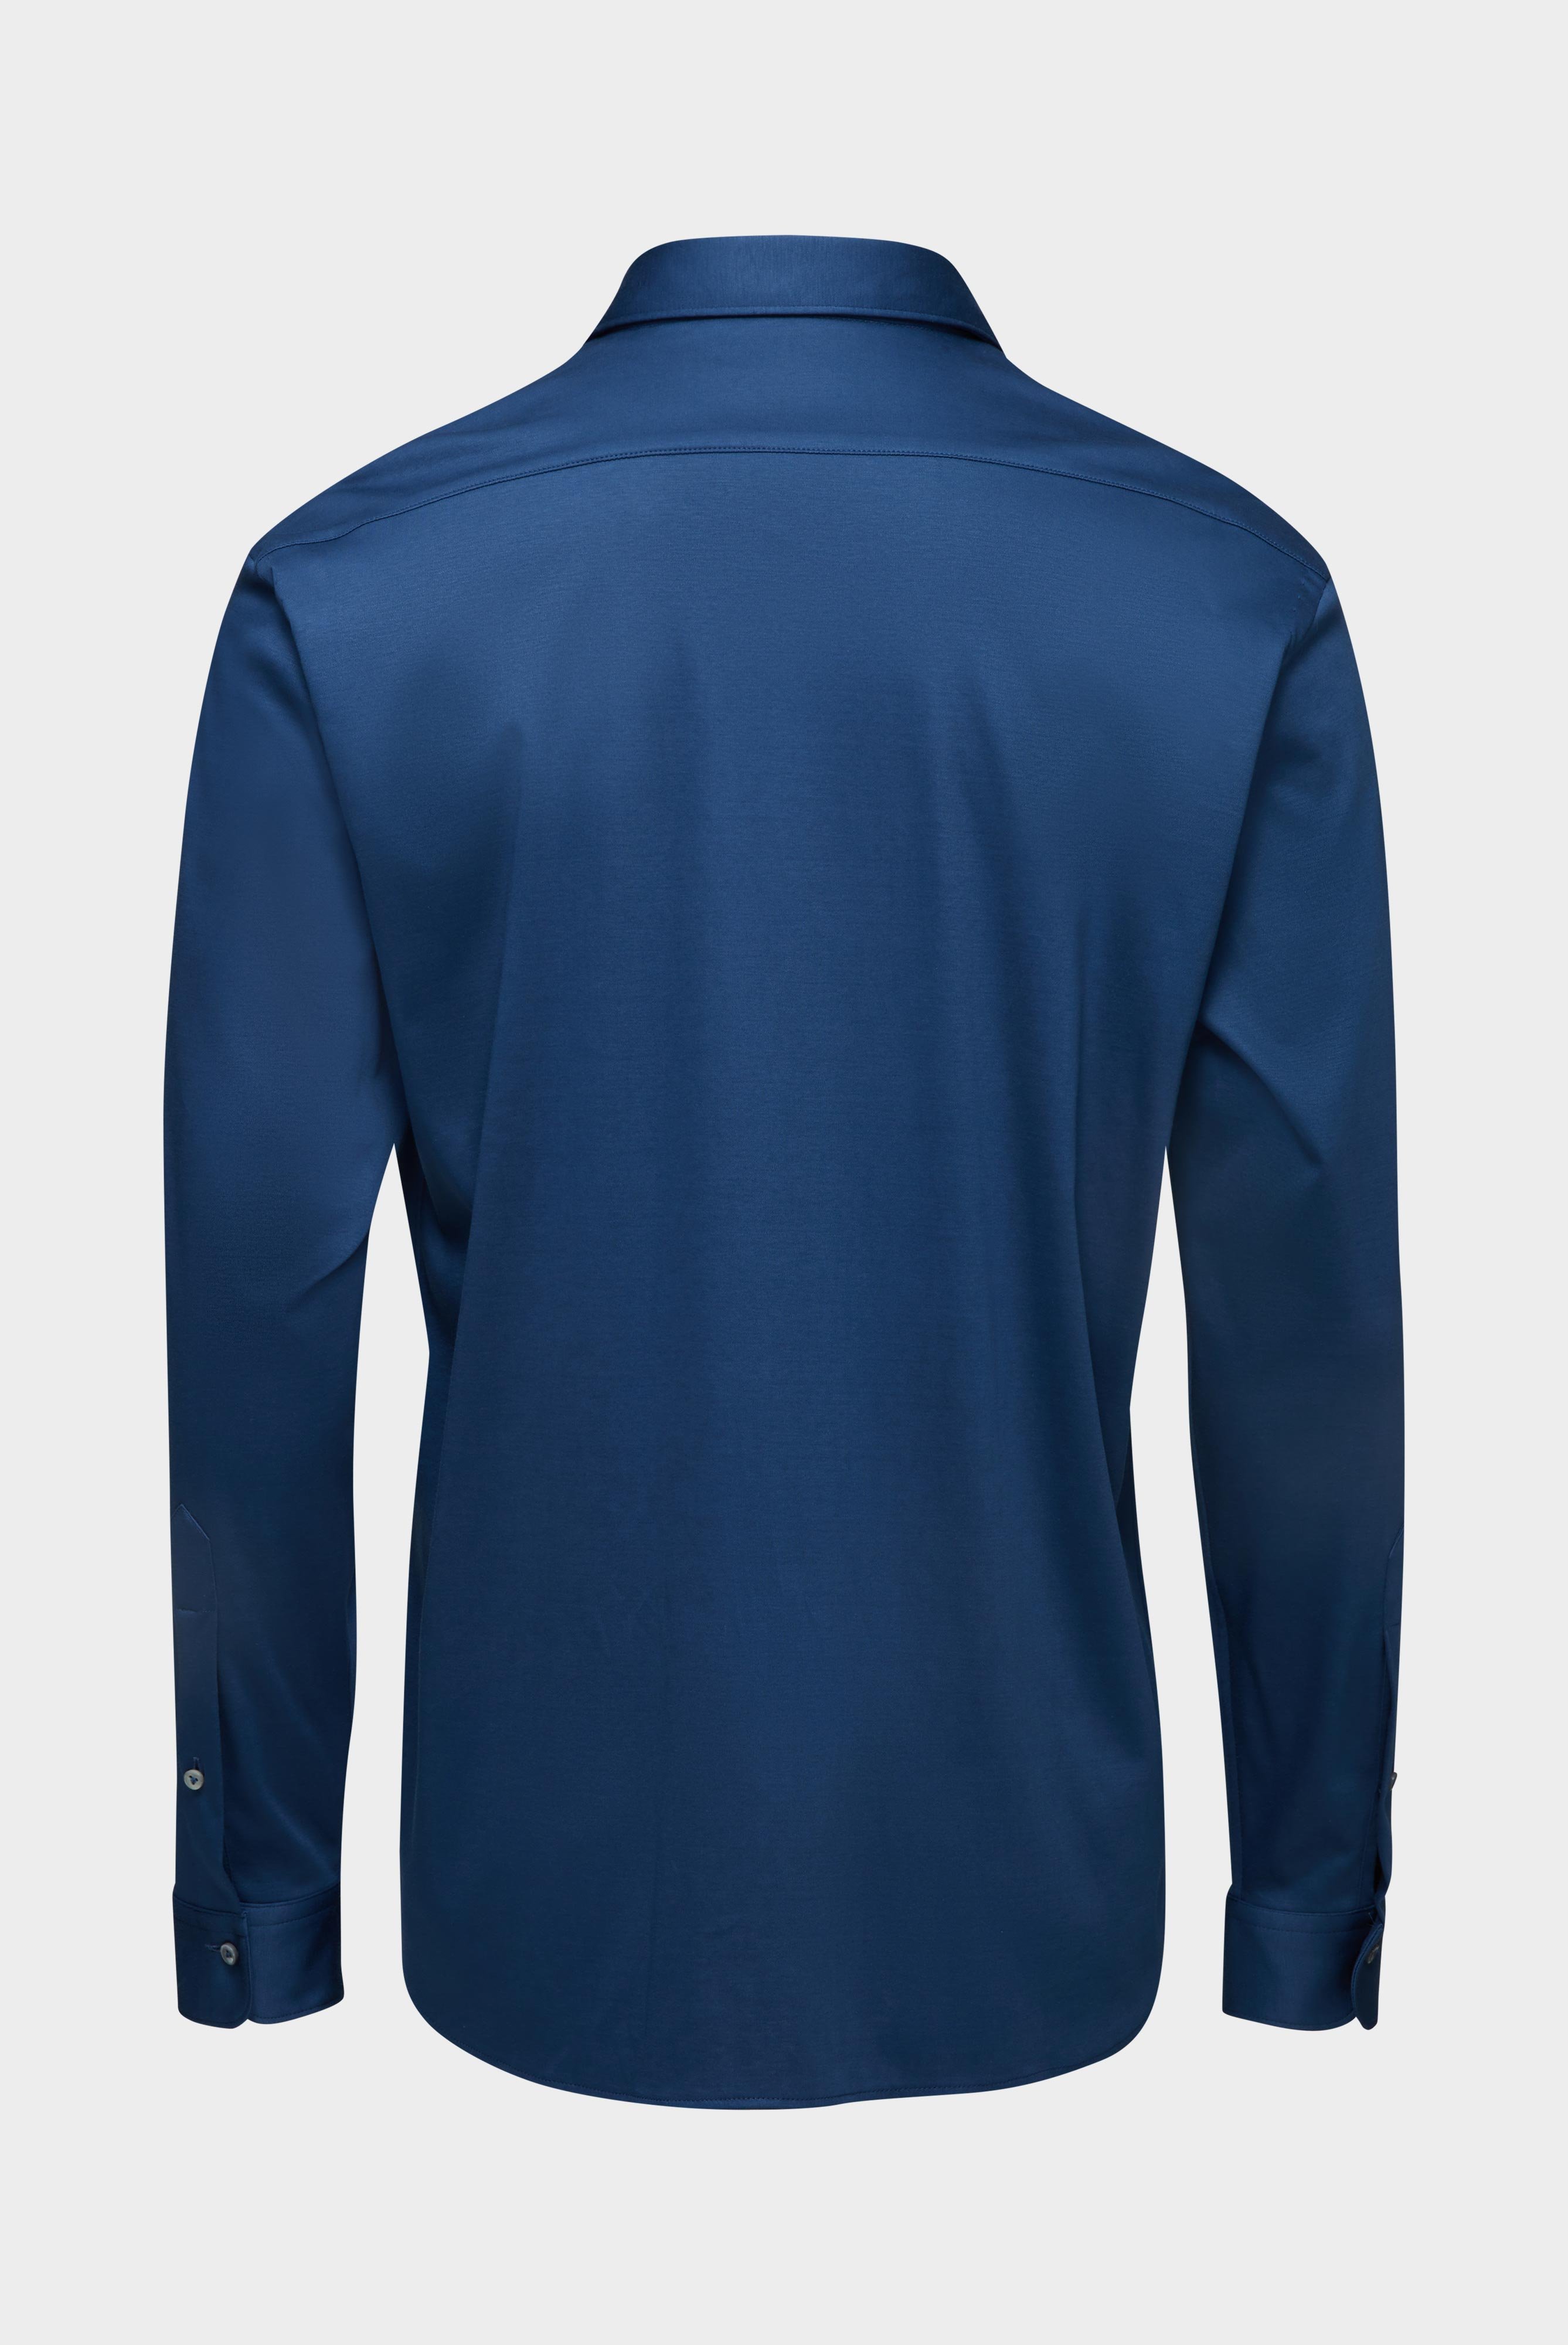 Casual Hemden+Jersey Hemd aus Schweizer Baumwolle Tailor Fit+20.1683.UC.180031.780.L